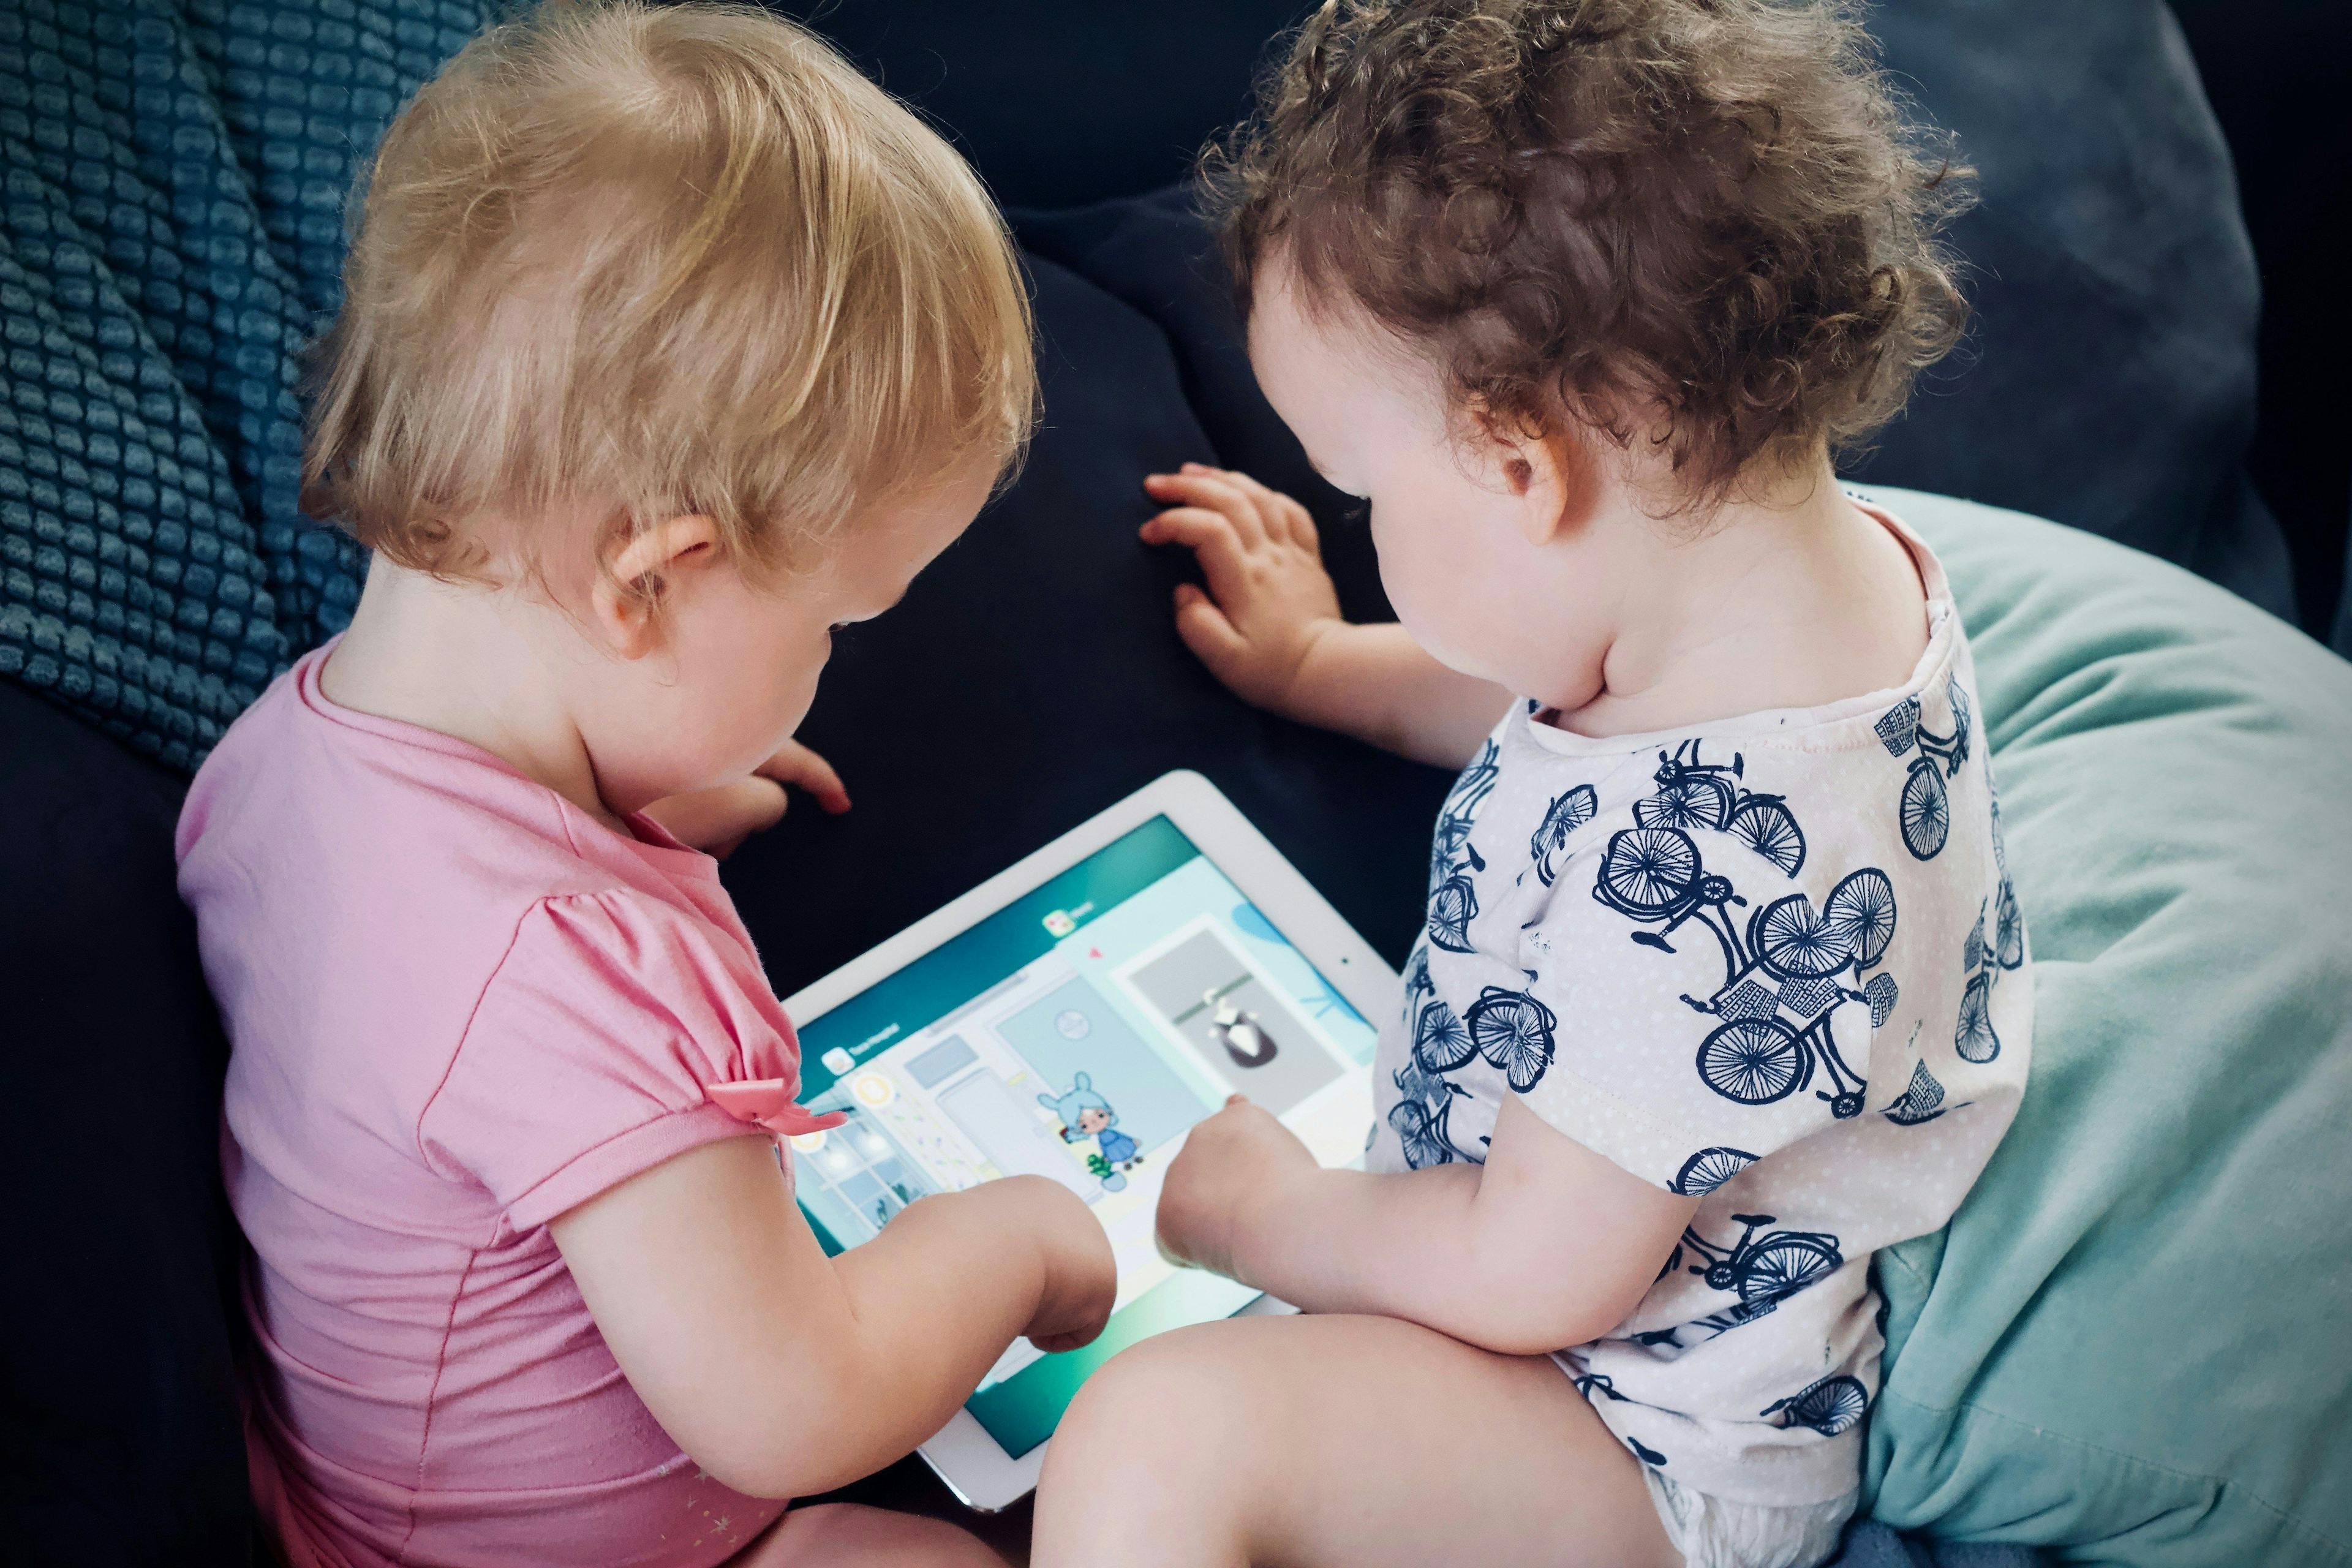 Toddler tablet use may hinder attentive, behavioral development